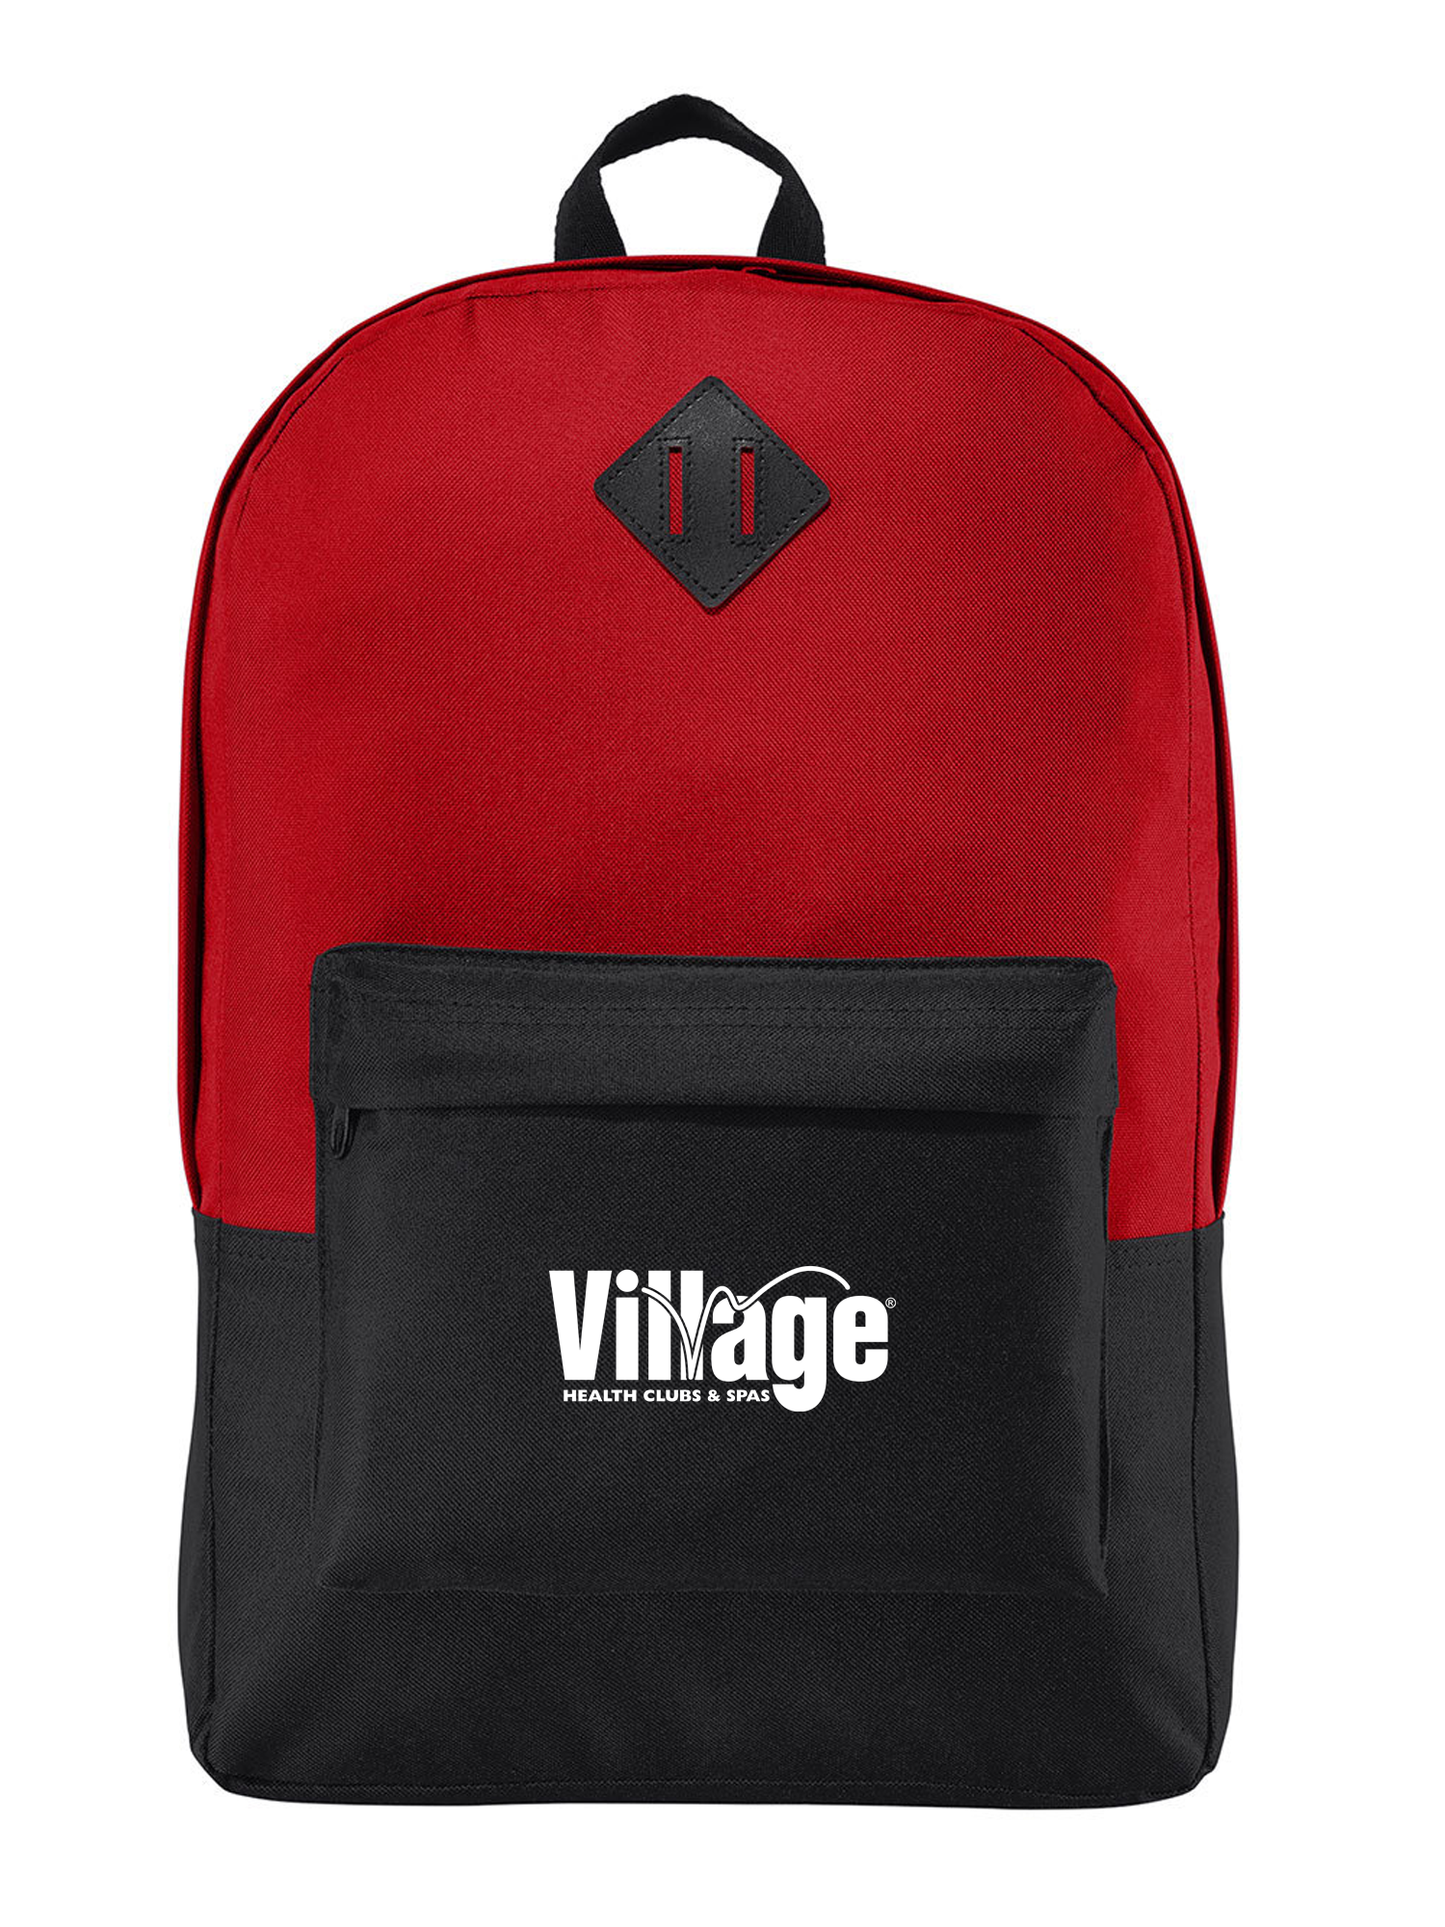 Village Retro Backpack